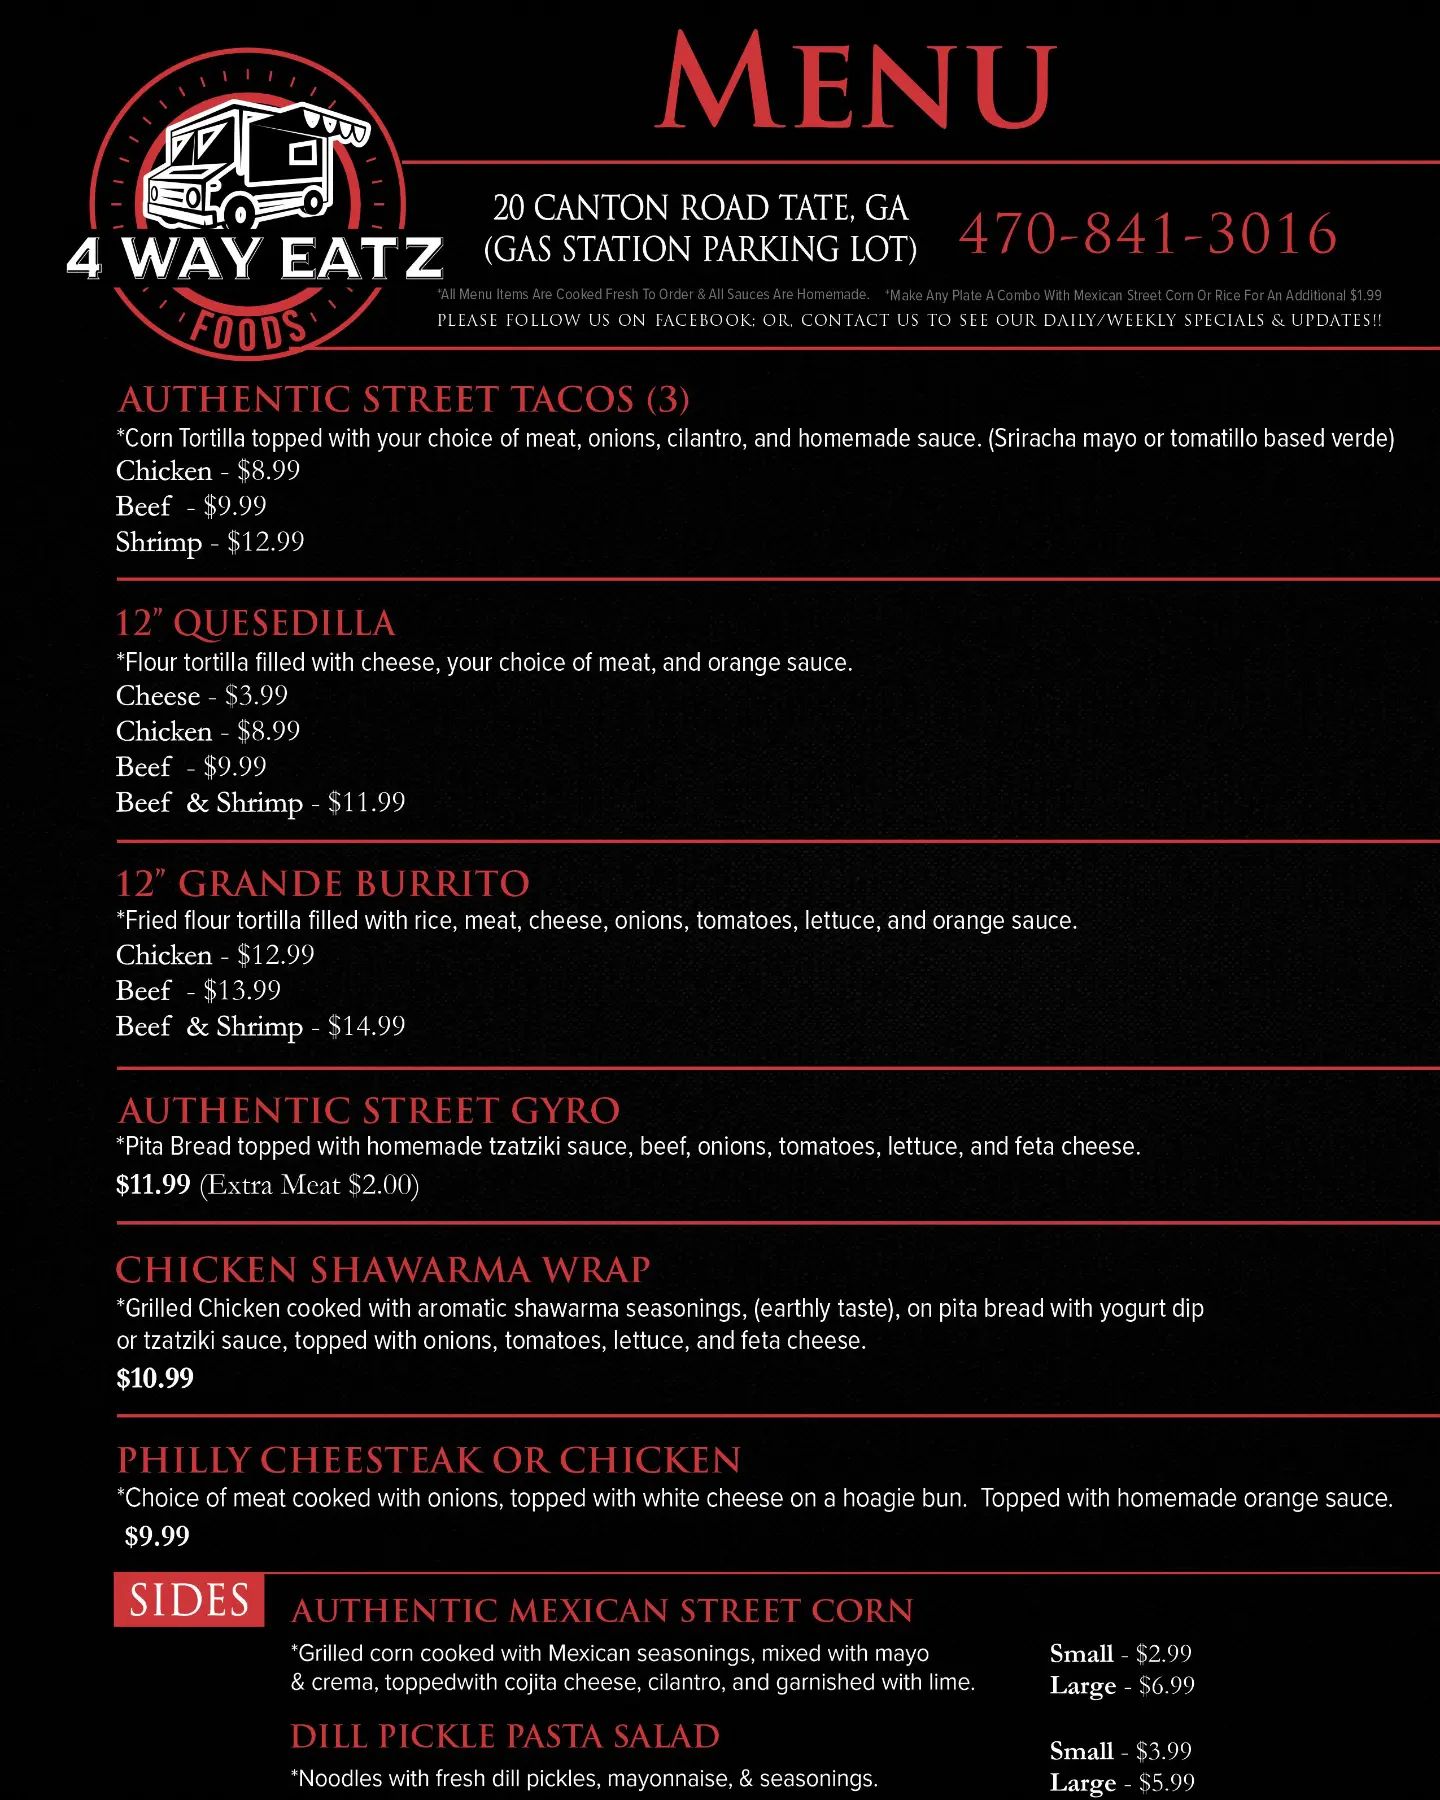 4 way eatz menu.jpg